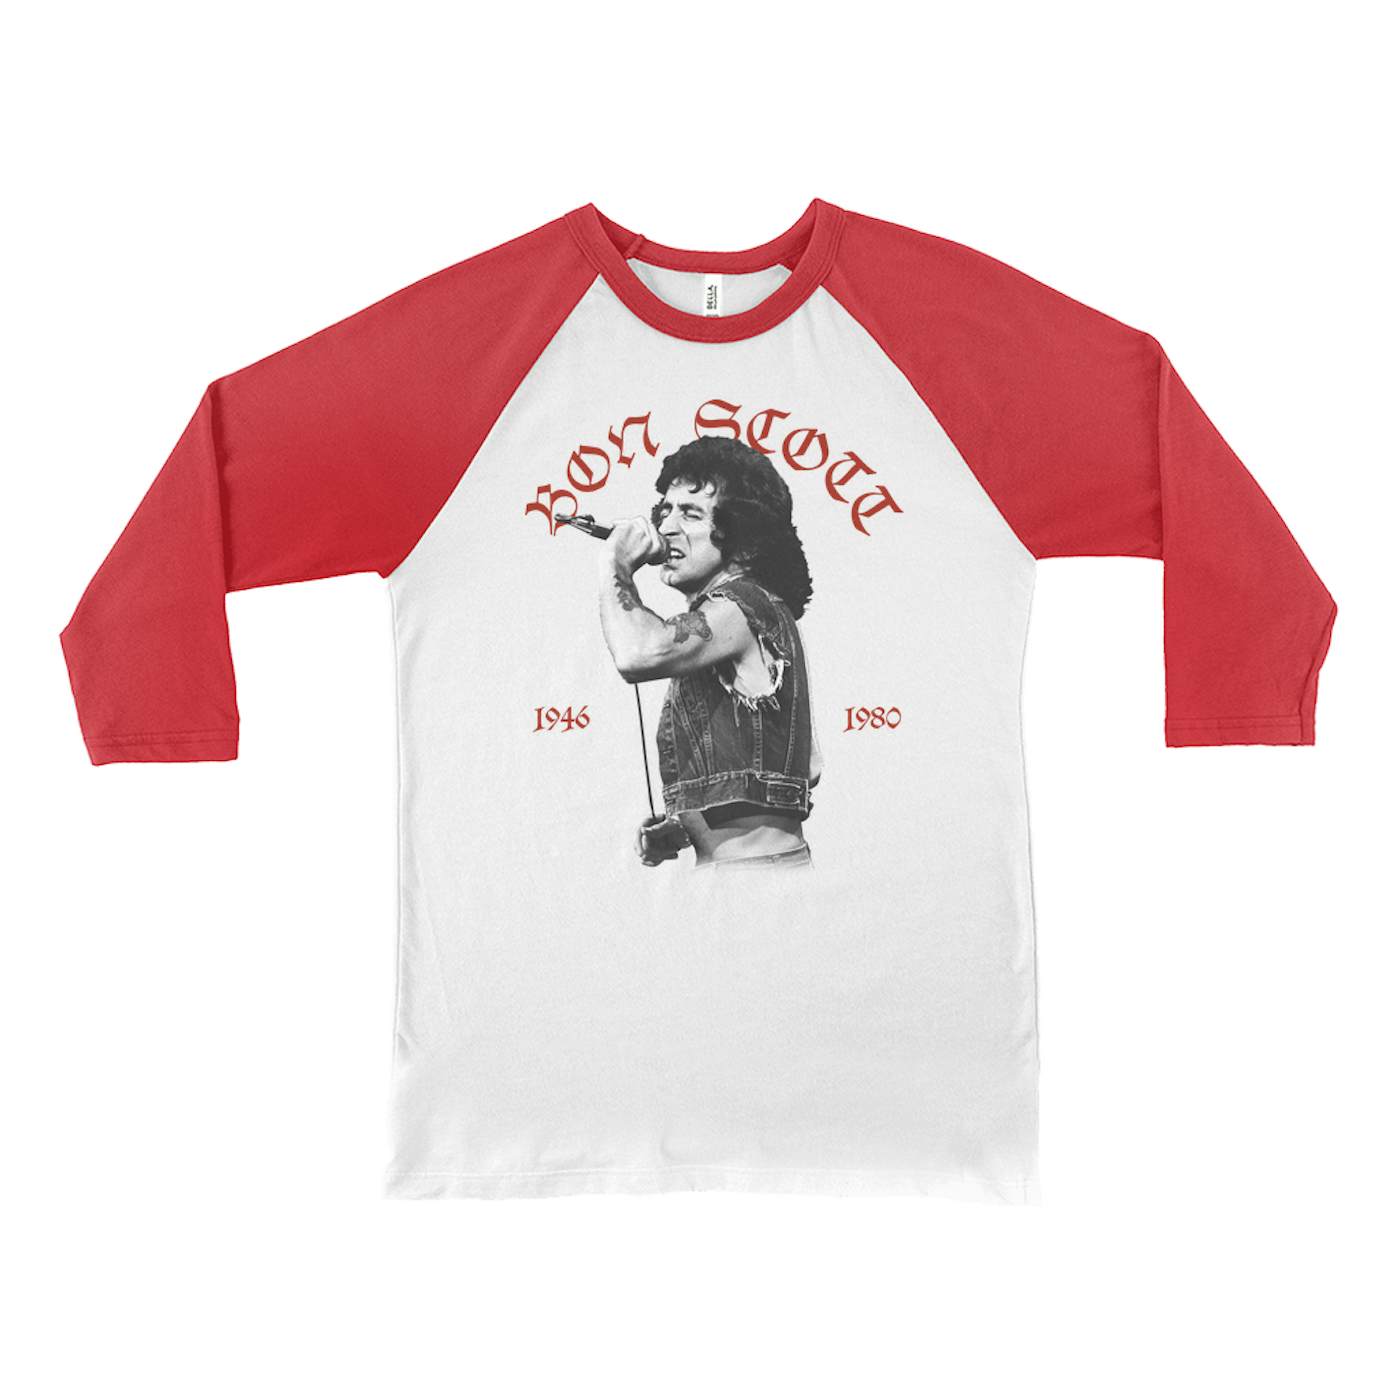 Bon Scott 3/4 Sleeve Baseball Tee | Old English 1946-1980 Bon Scott Shirt